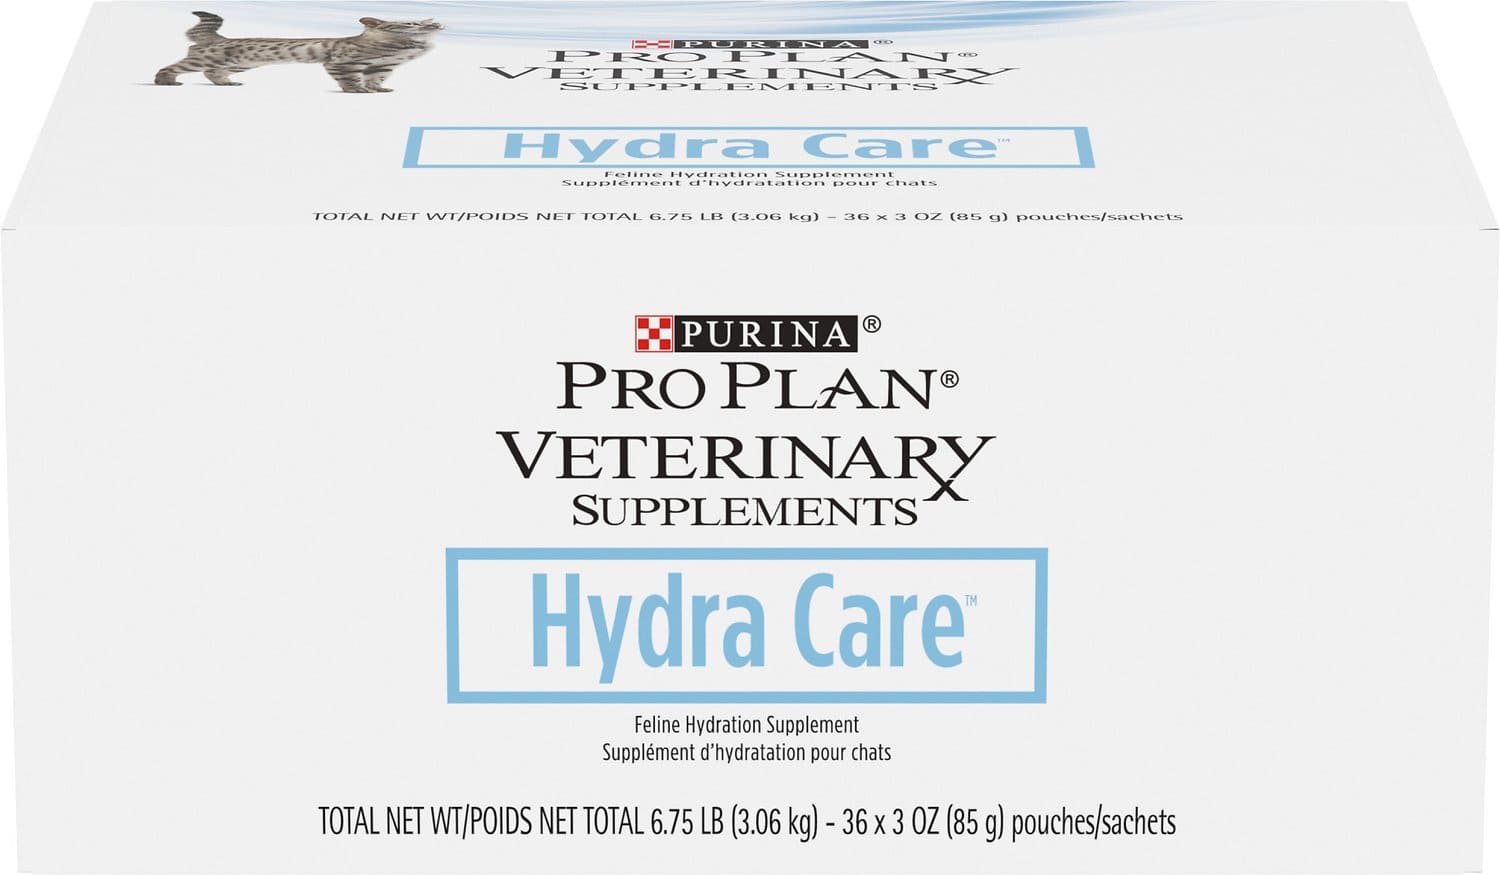 Purina Pro Plan Veterinary Supplements Hydra Care box of 36 sachets 1